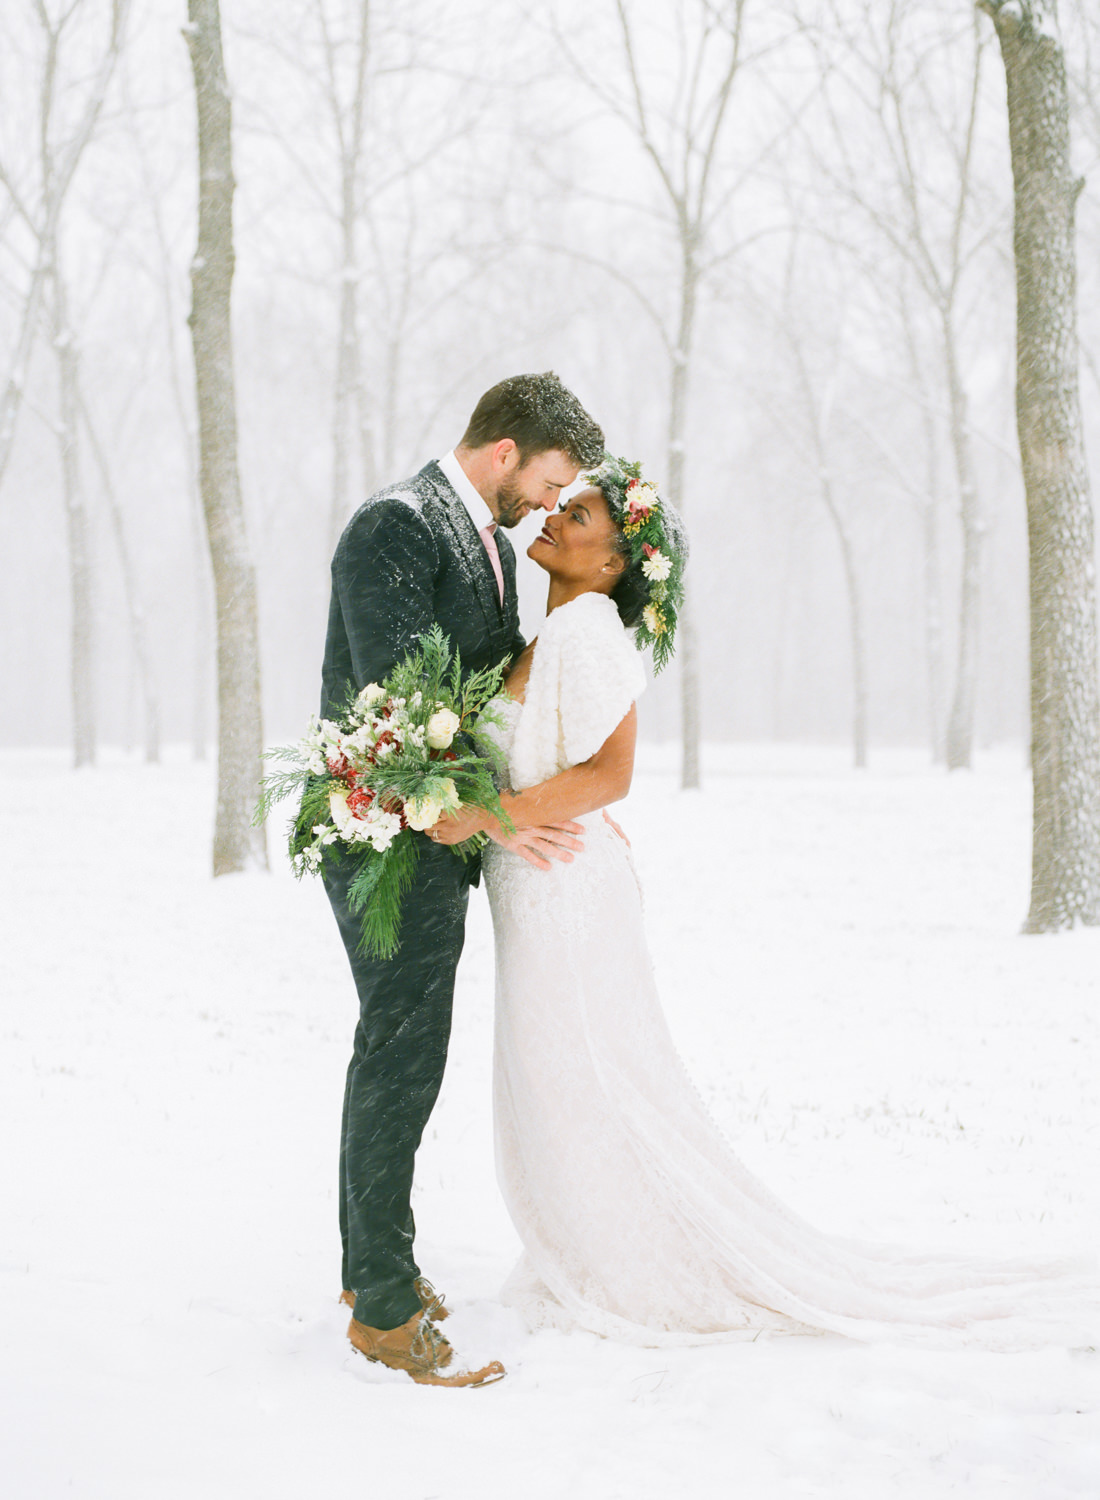 Winter wedding bride and groom in snow; St. Louis fine art film wedding photographer Erica Robnett Photography